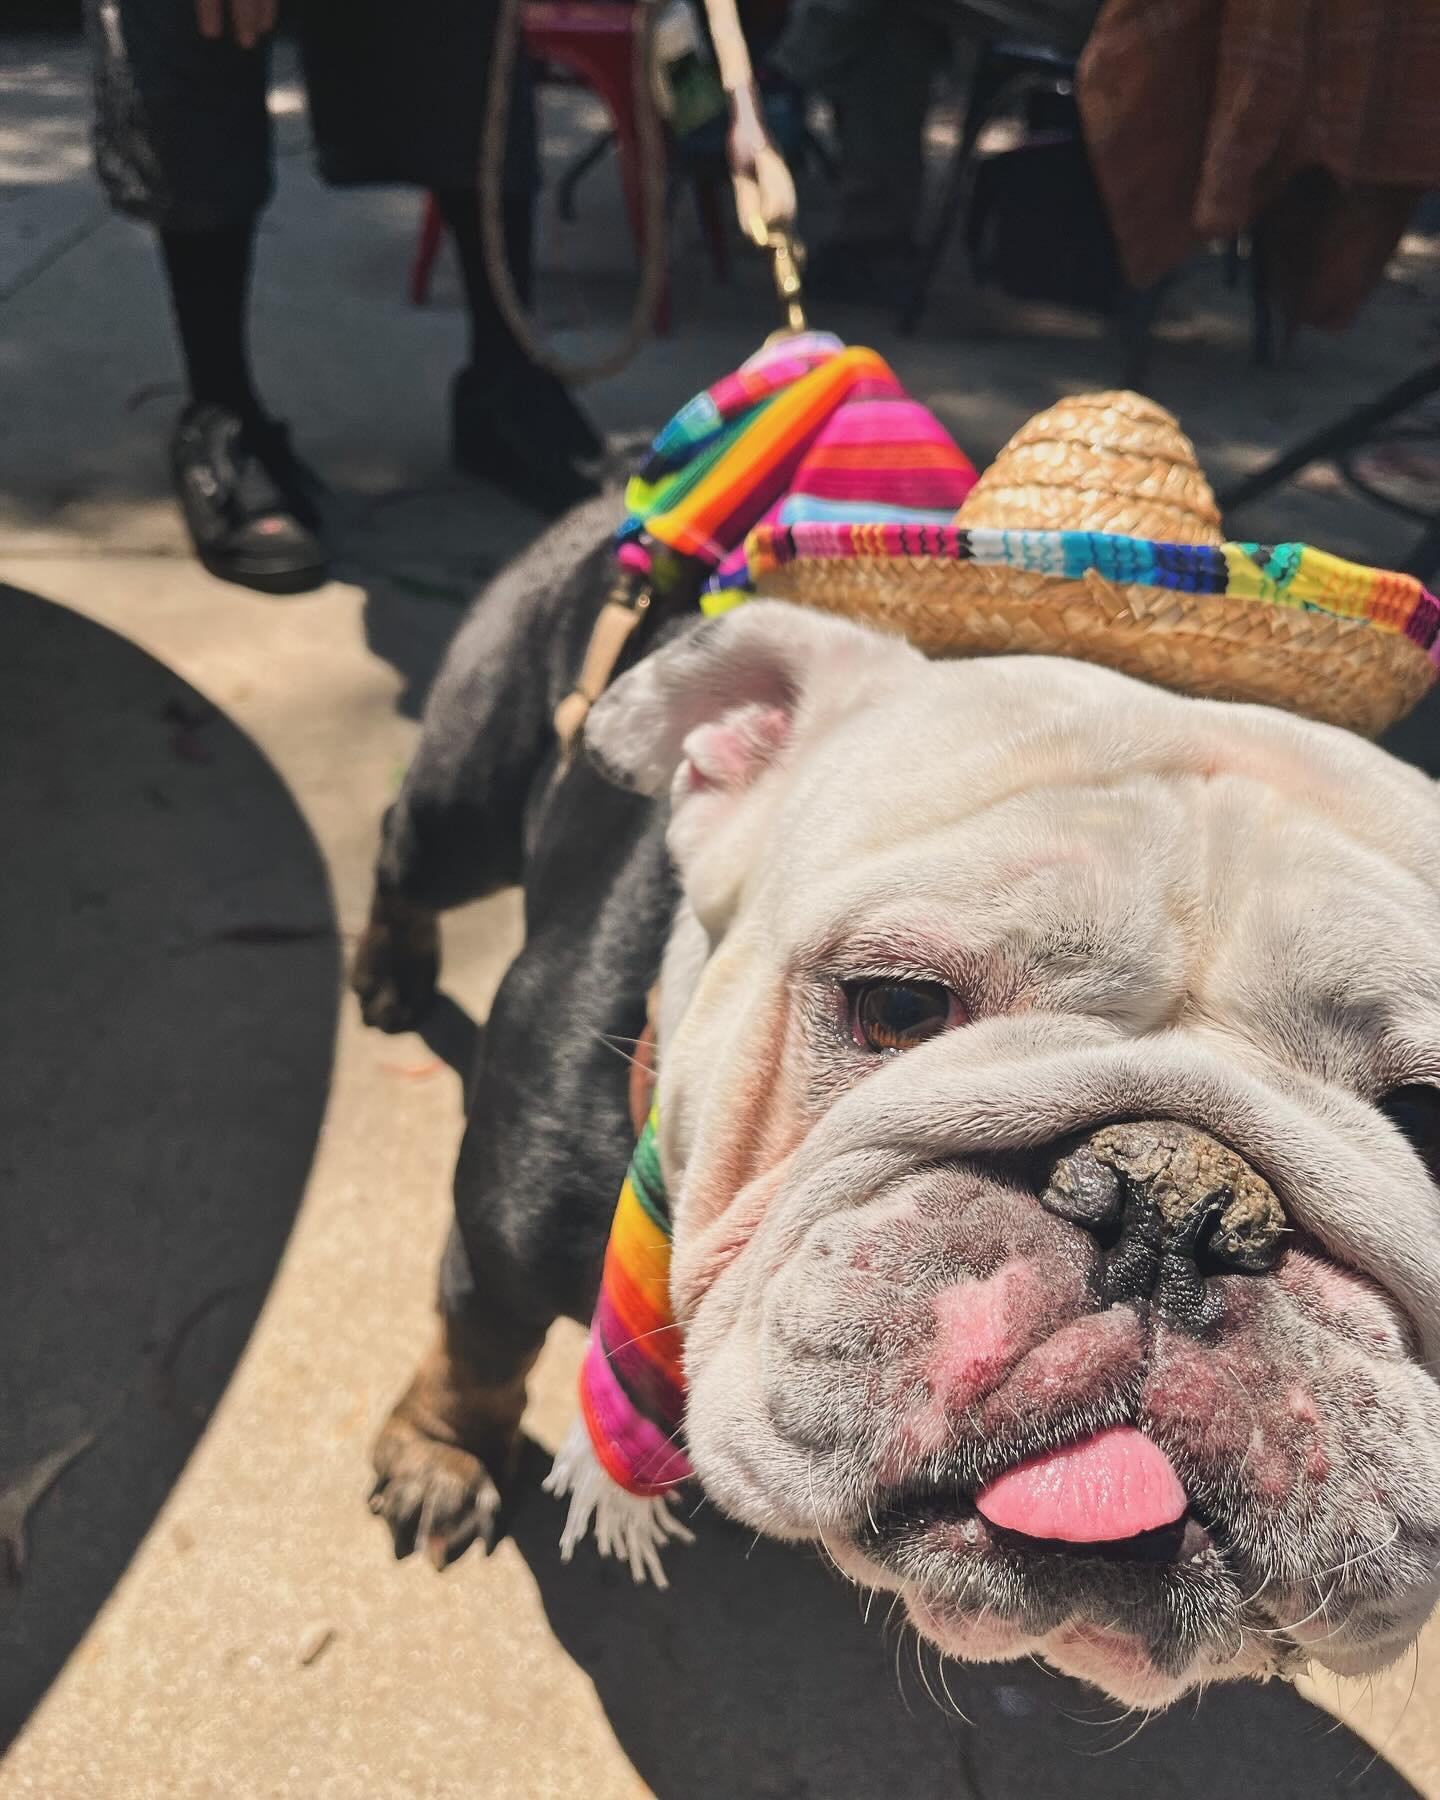 Join the festive spirit of Cinco de Mayo - &iexcl;Salud!
.
.
.
#americanbulldog #sombrero #goleta #goodland #sundayvibes #cincodemayo